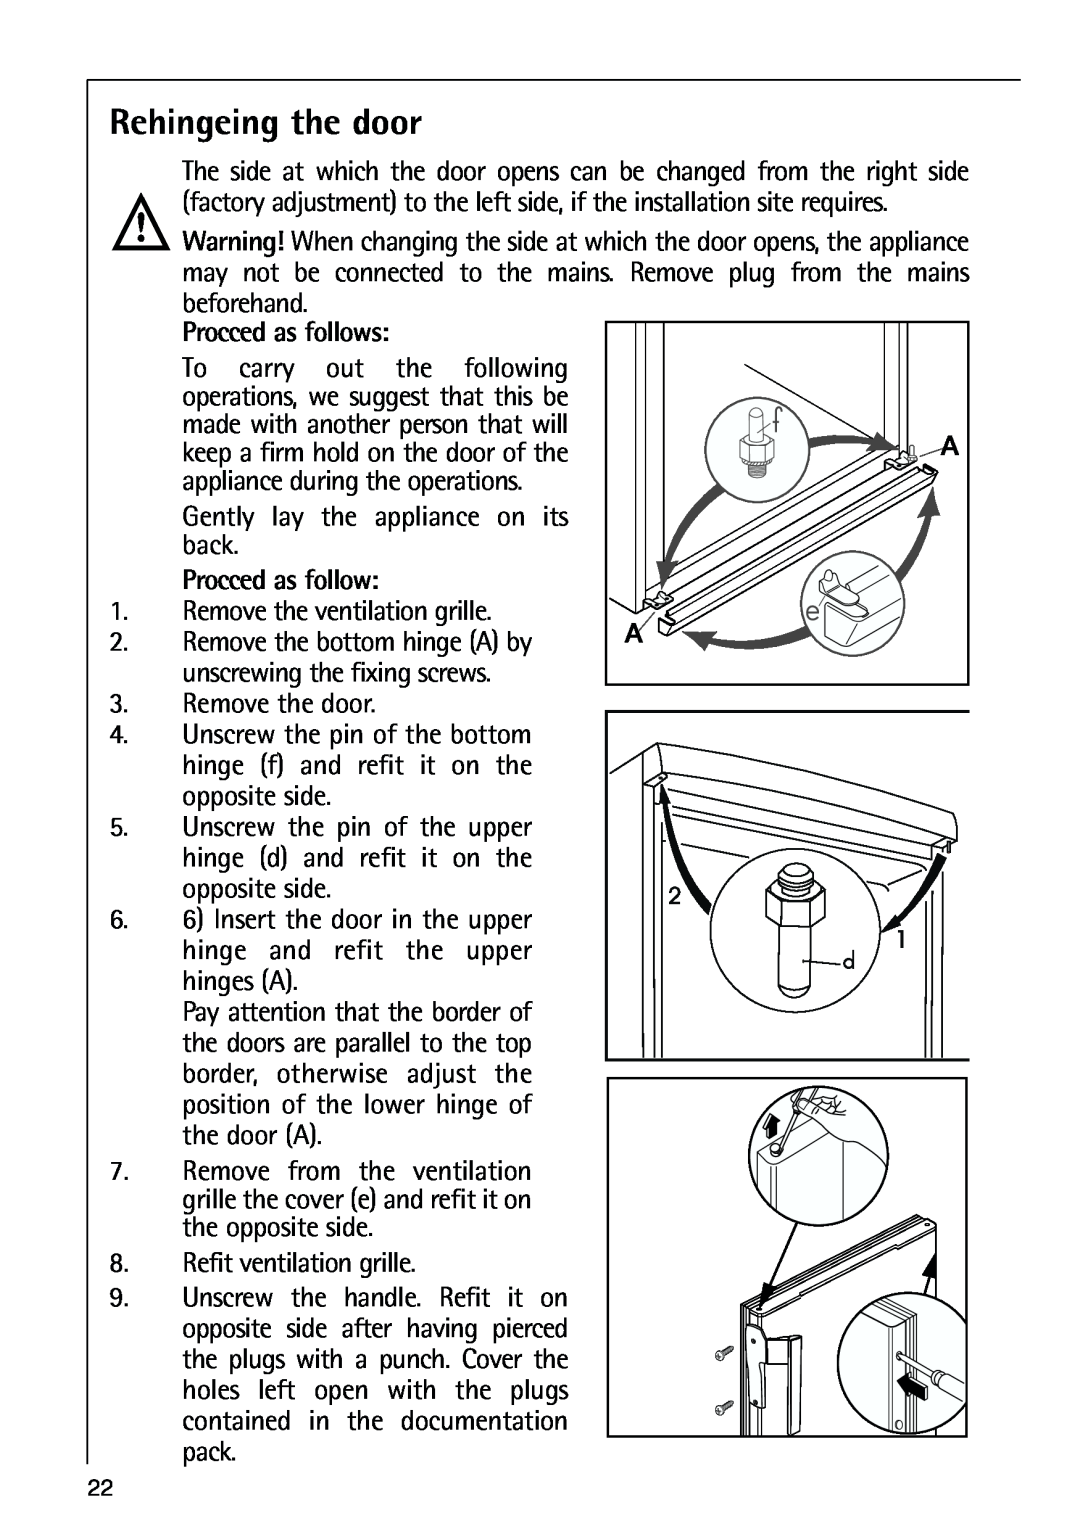 Electrolux 75270 GA user manual Rehingeing the door, Procced as follows 